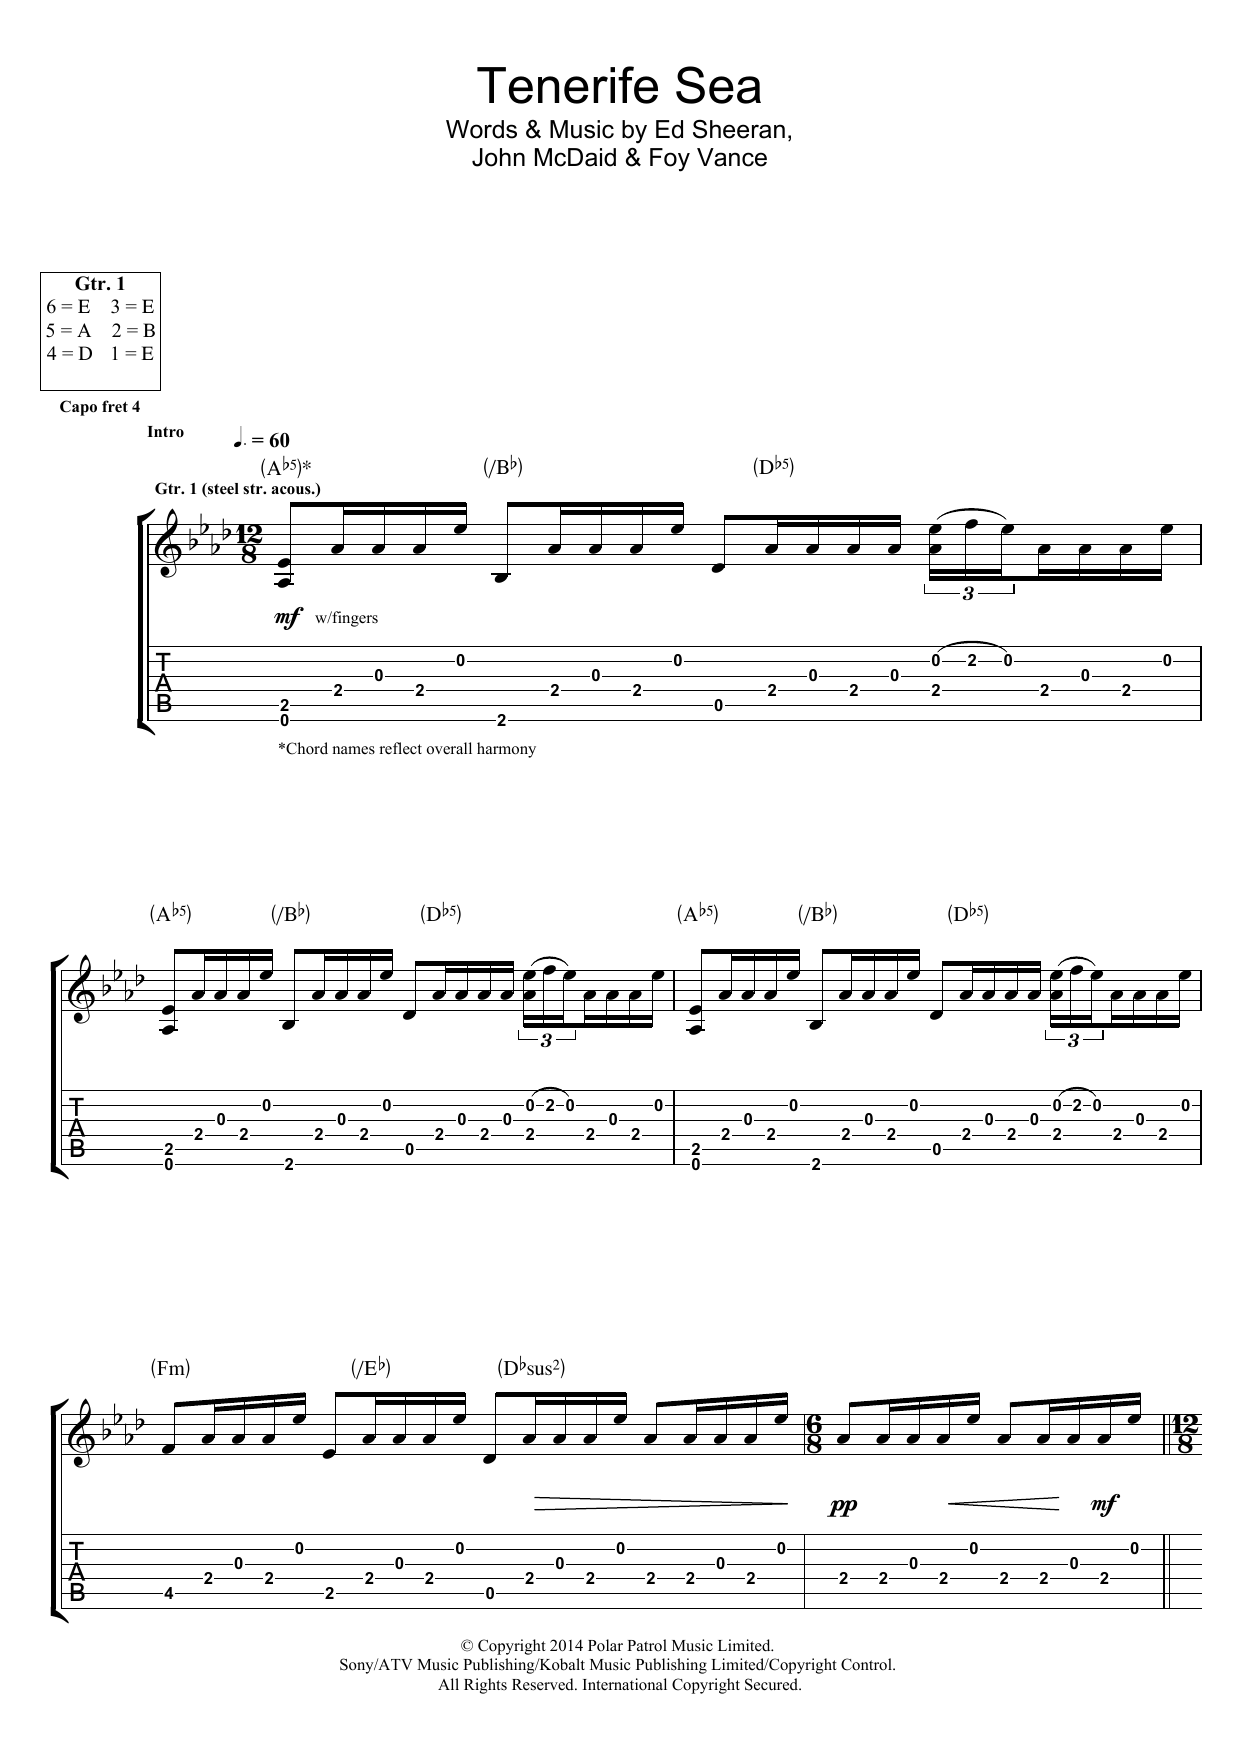 Ed Sheeran Tenerife Sea Sheet Music Notes & Chords for Super Easy Piano - Download or Print PDF